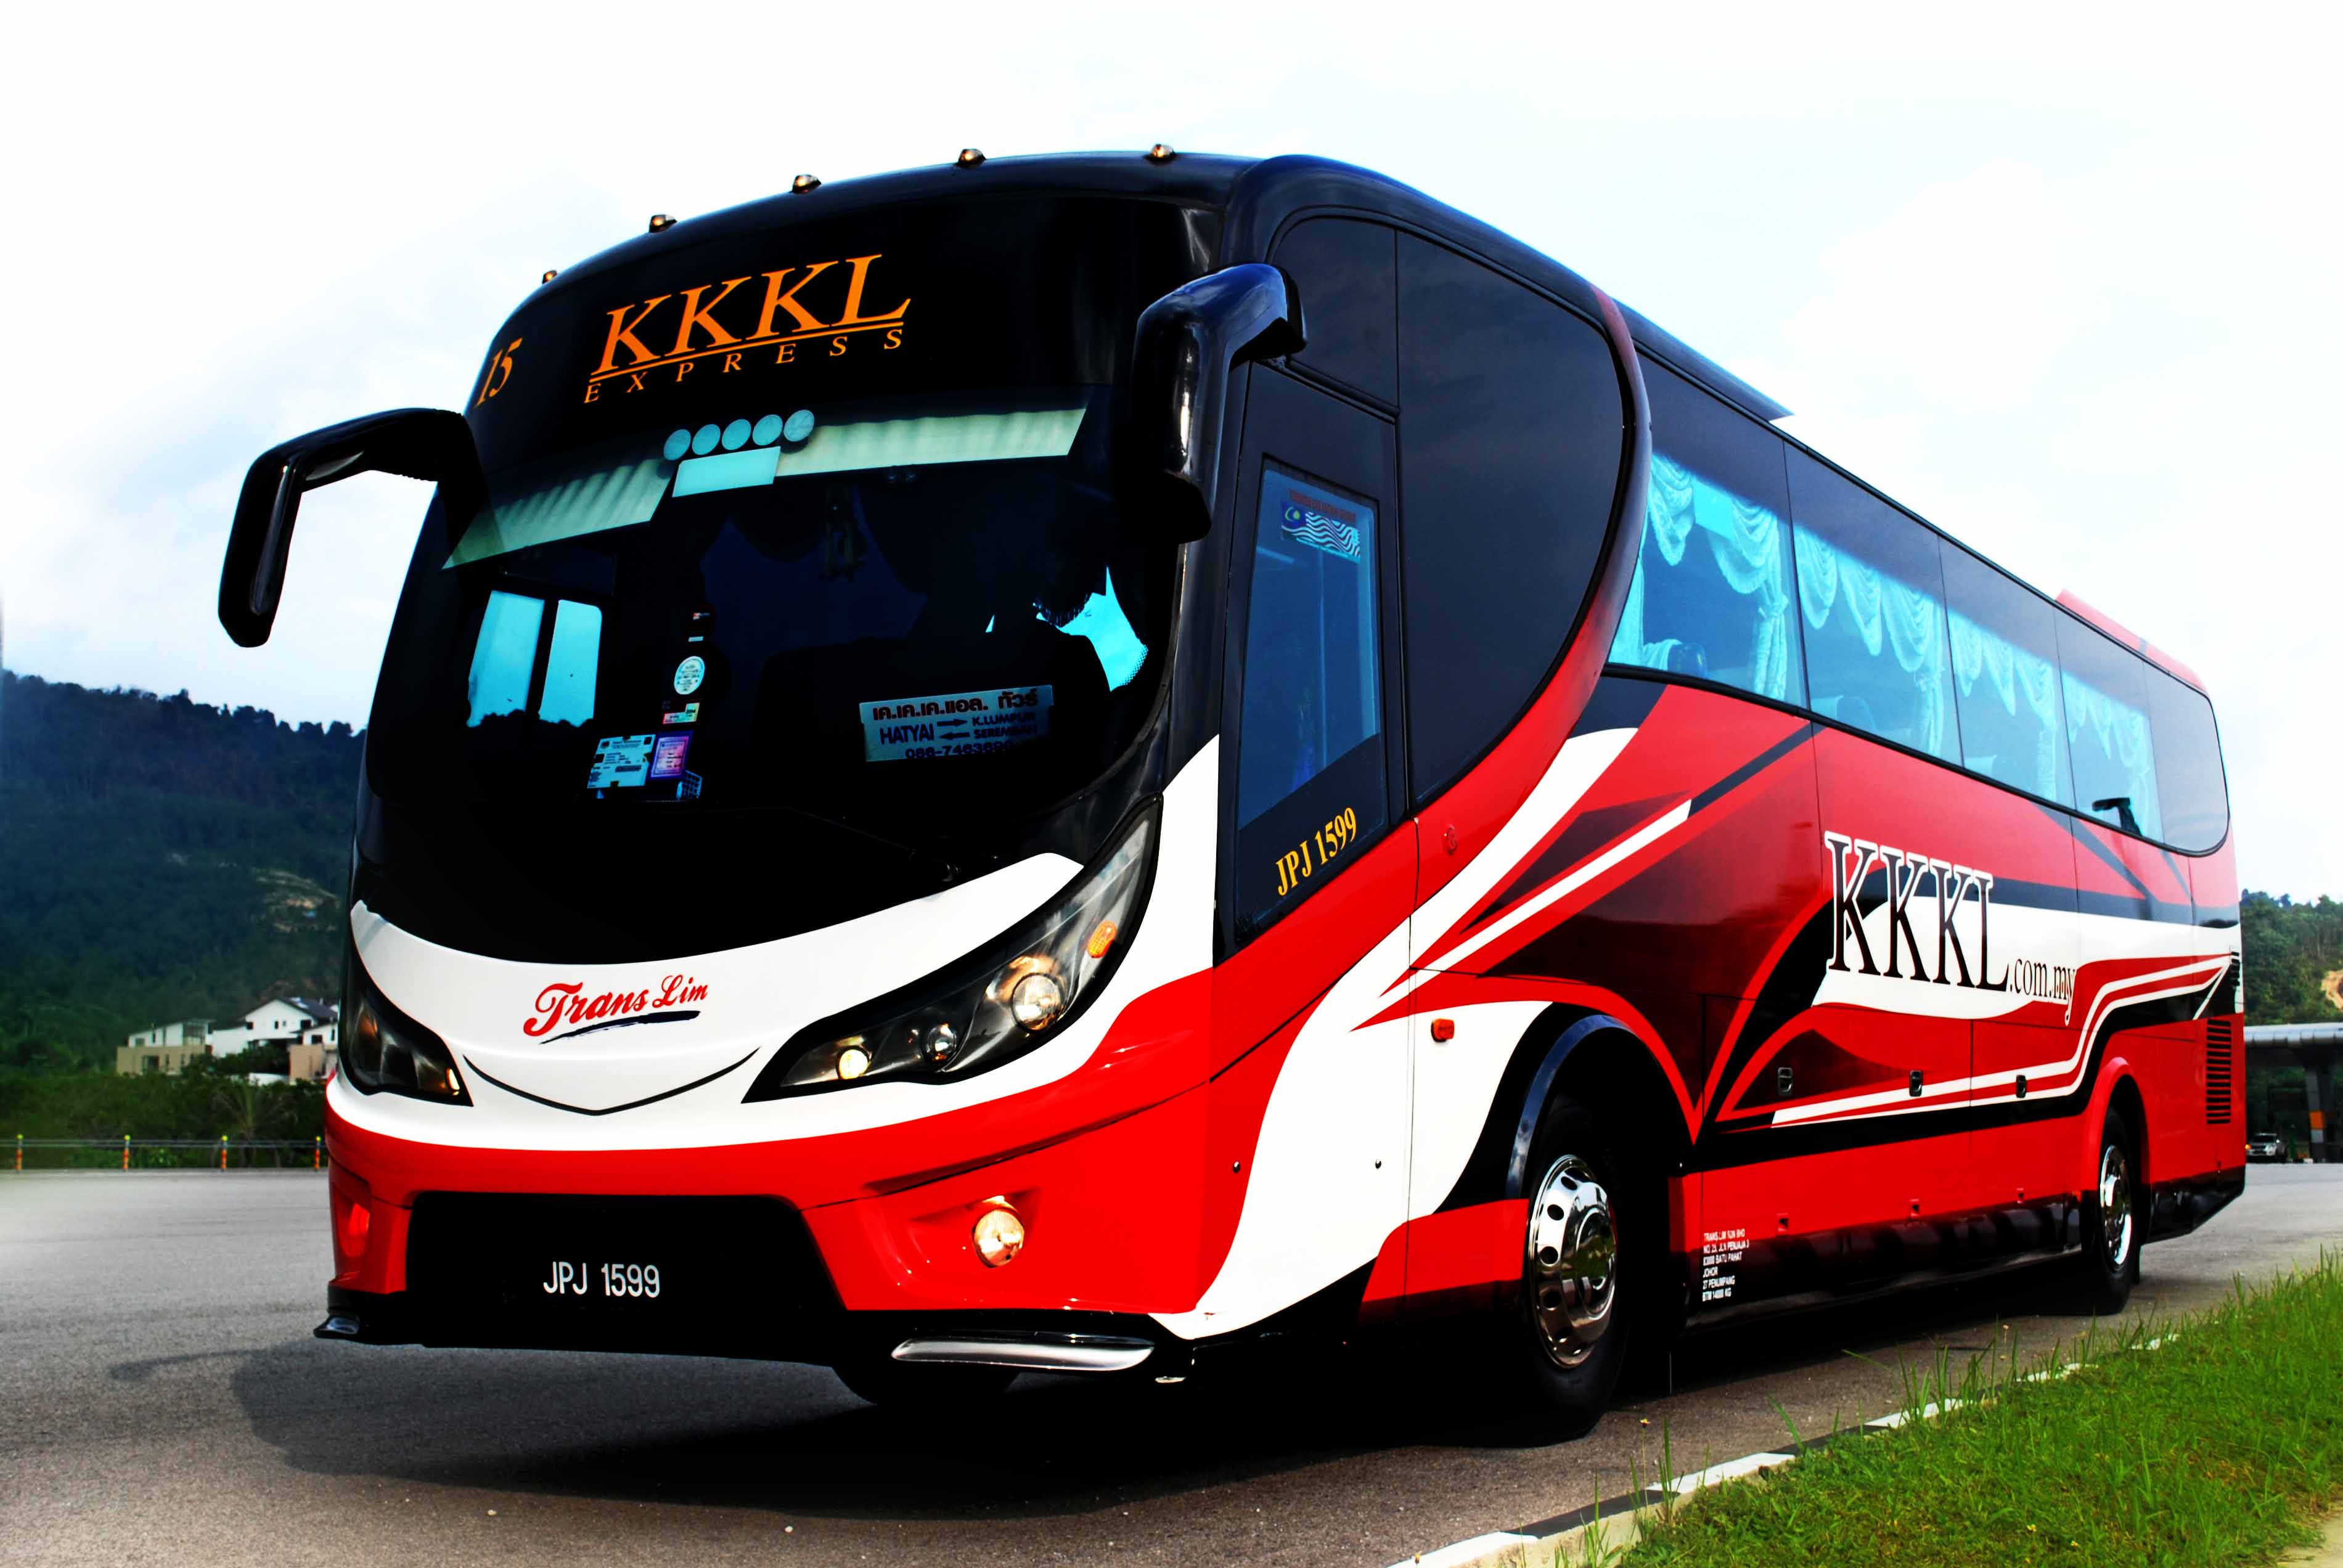 Bus from Singapore to Kuala Lumpur